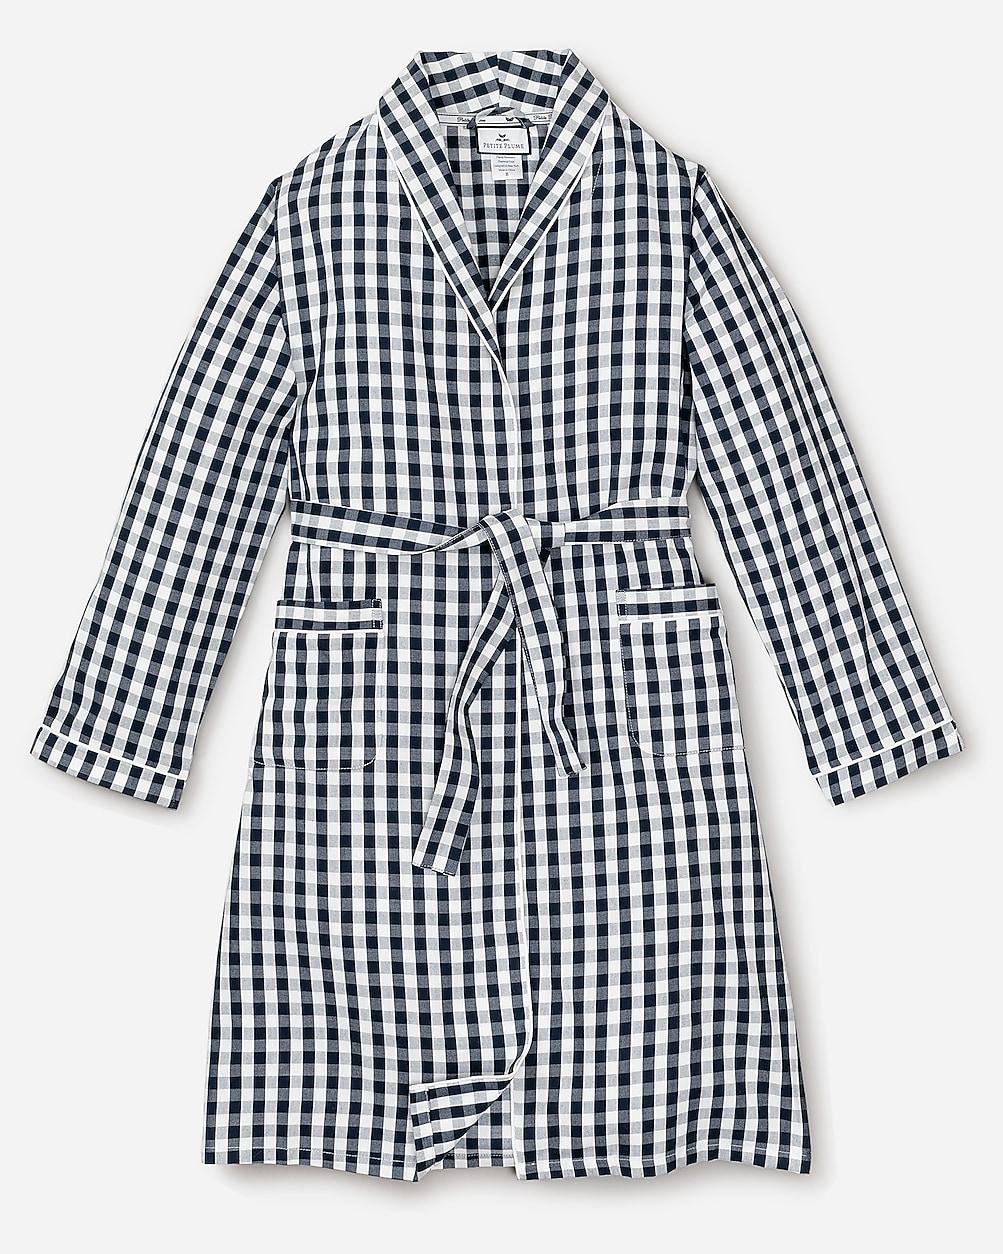 Petite Plume™ men's robe in gingham by J.CREW